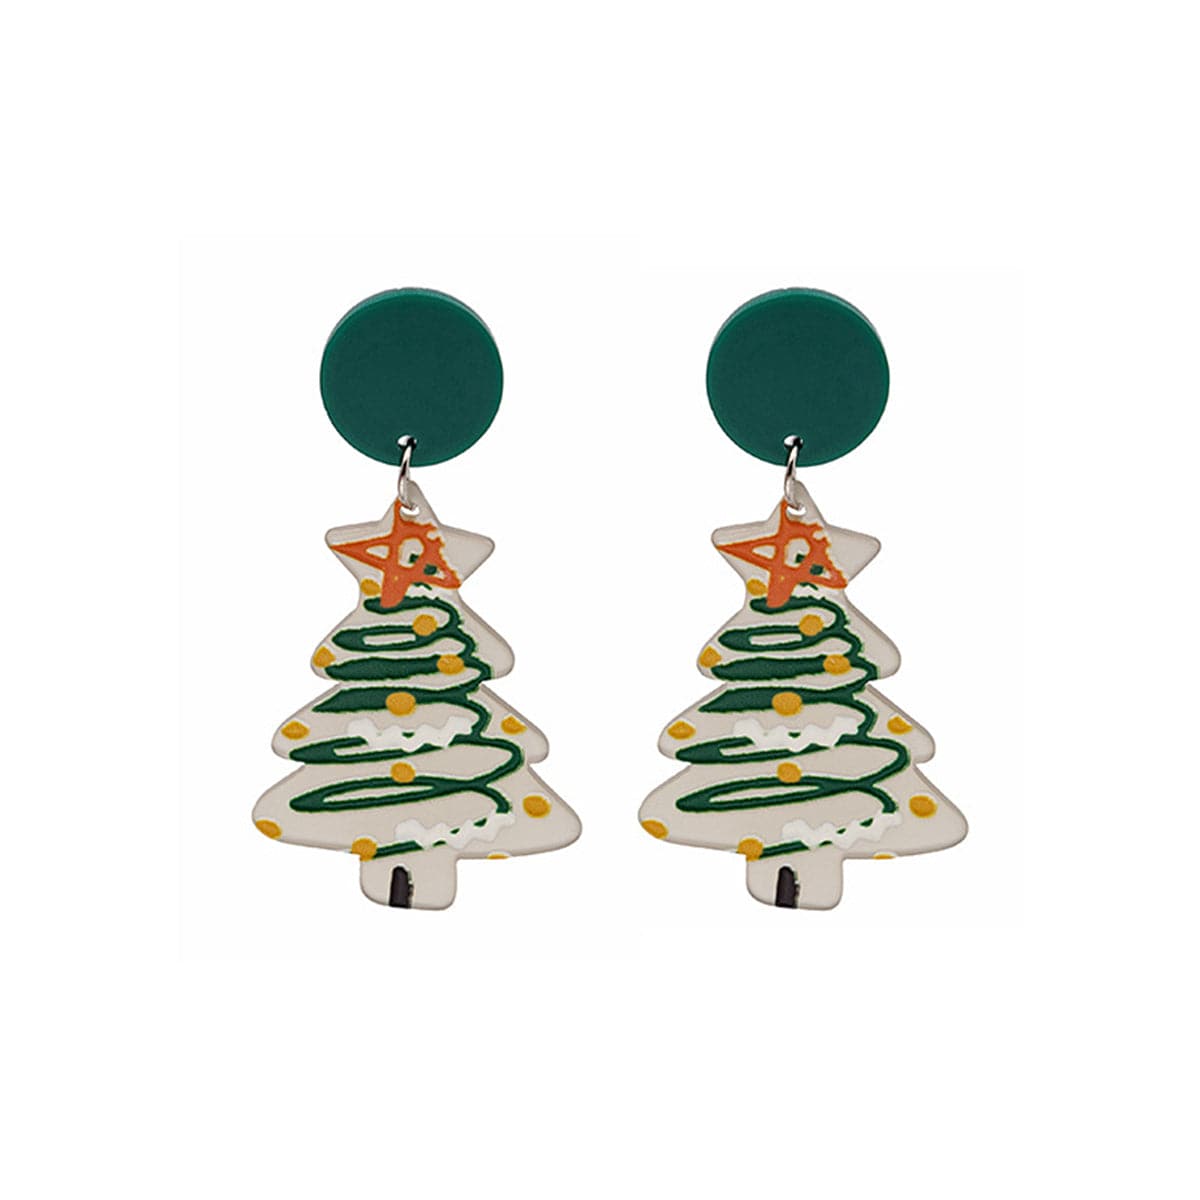 Light Green & White Christmas Tree Drop Earrings